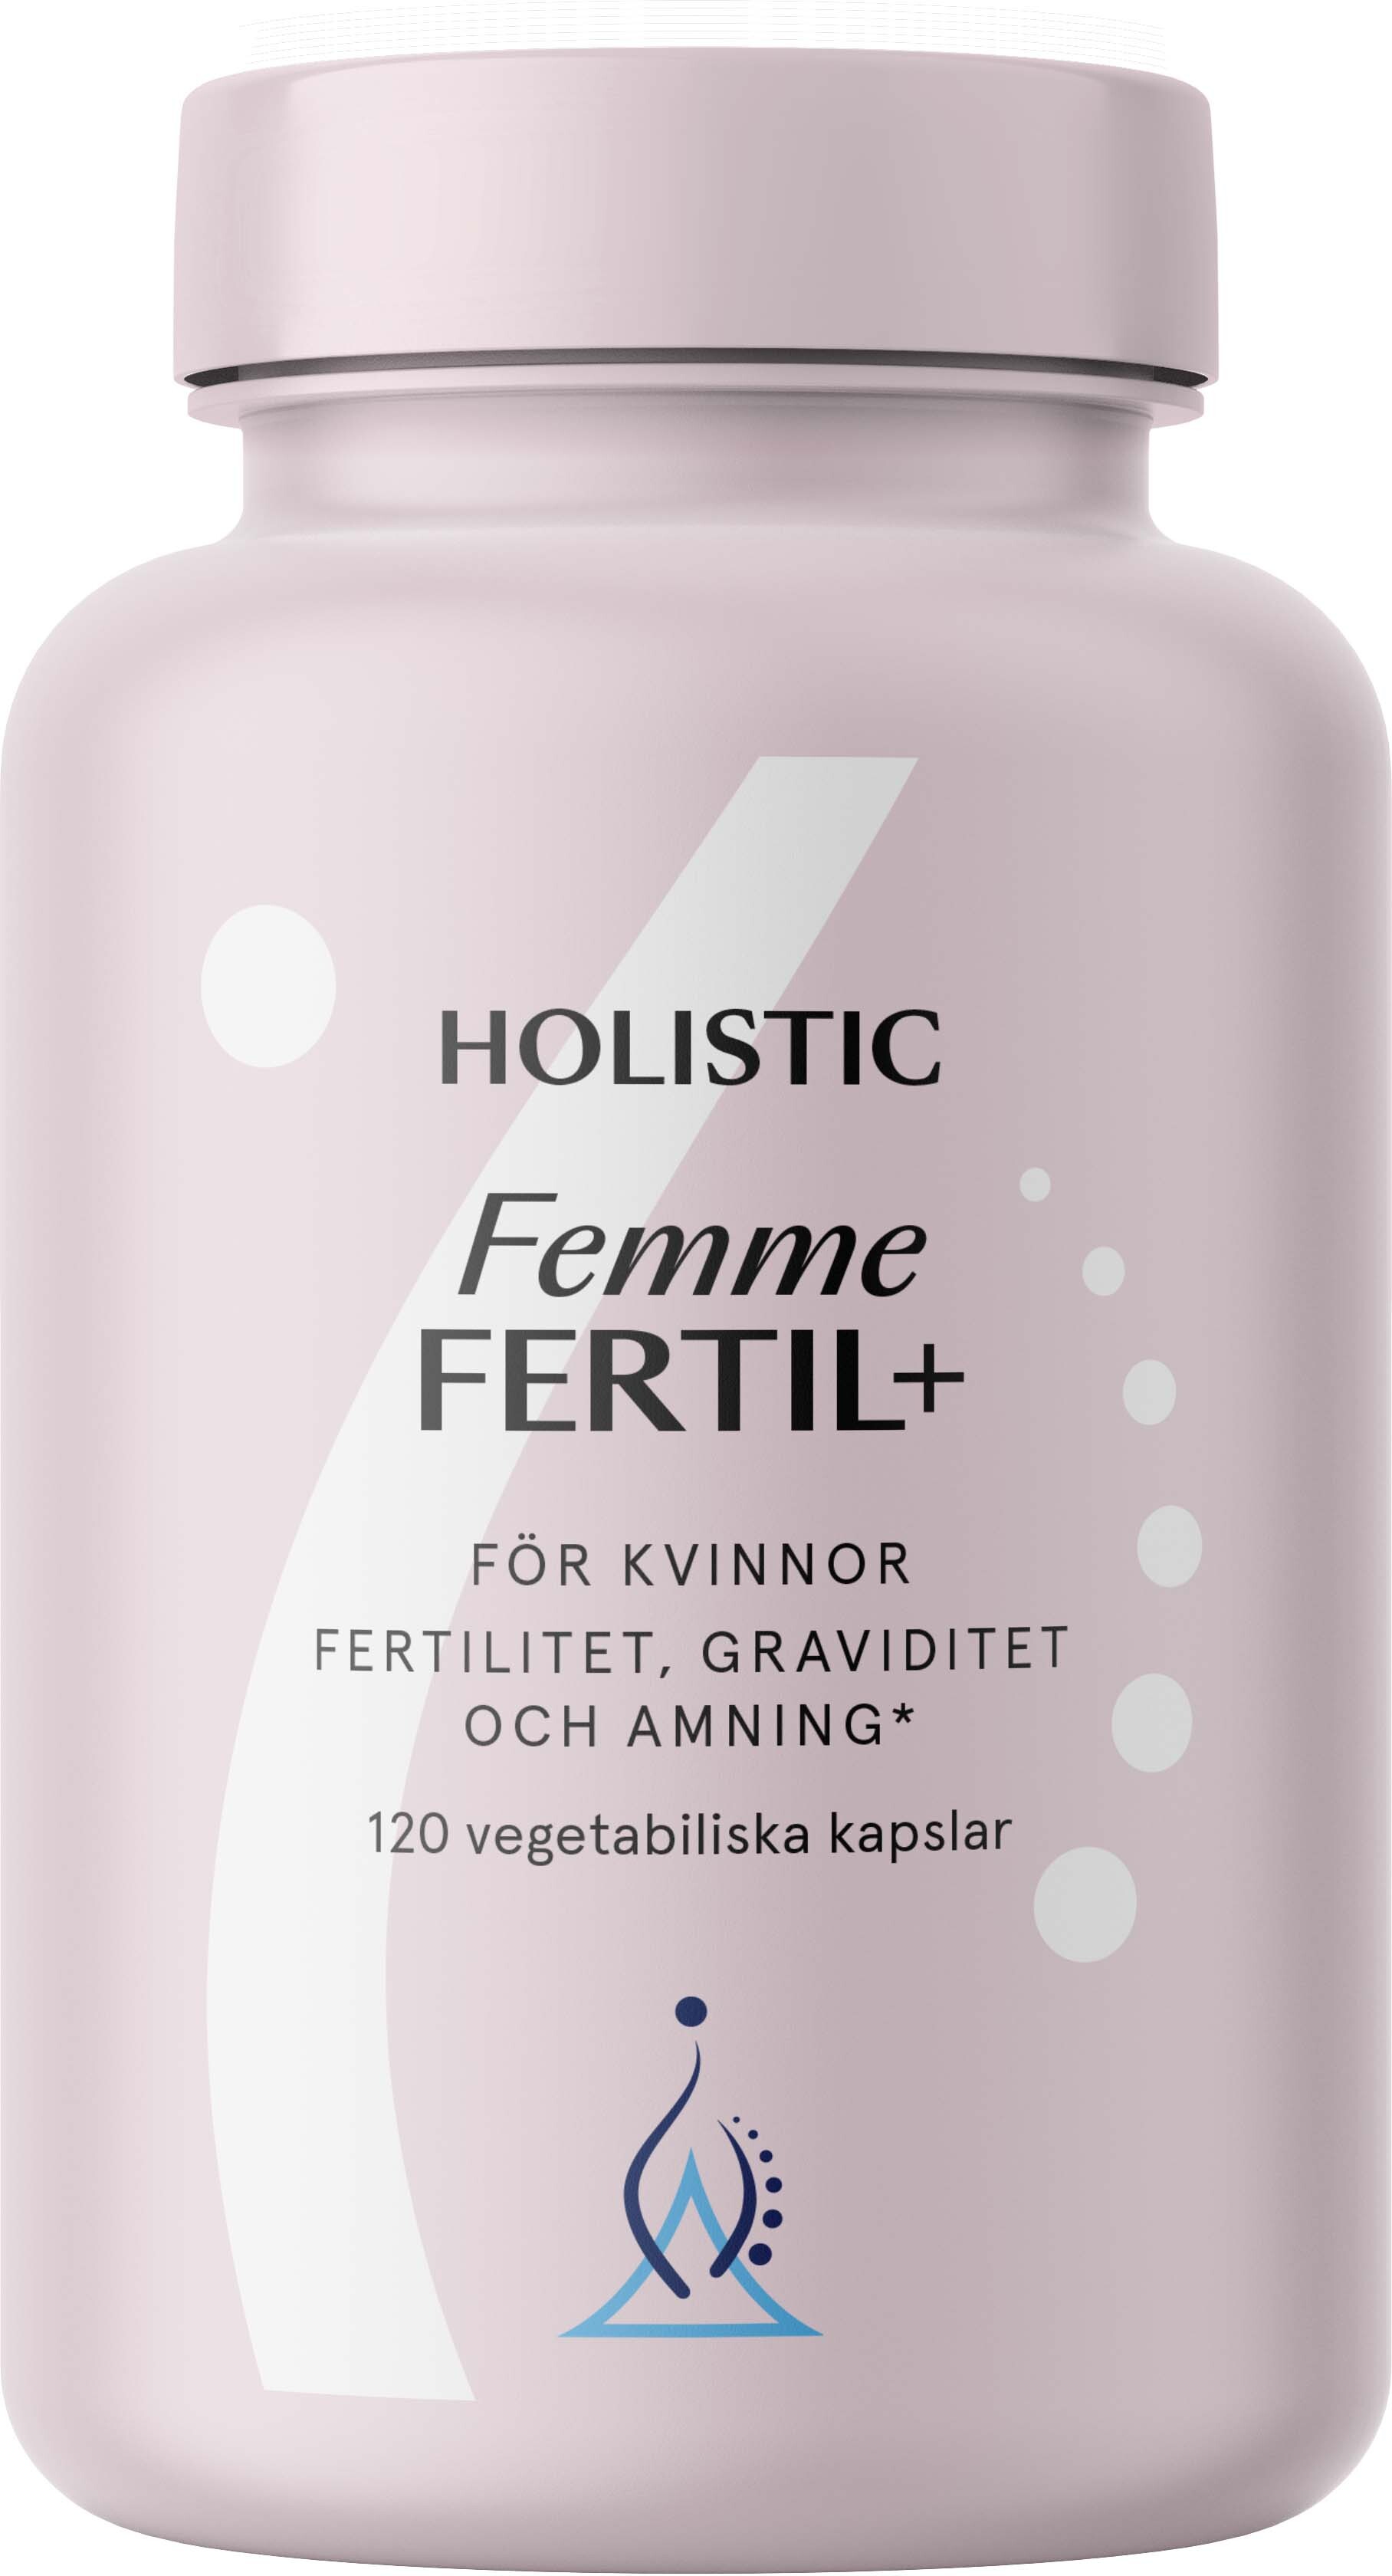 Holistic Femme Fertil+ 120 vegetabiliska kapslar 120 St.